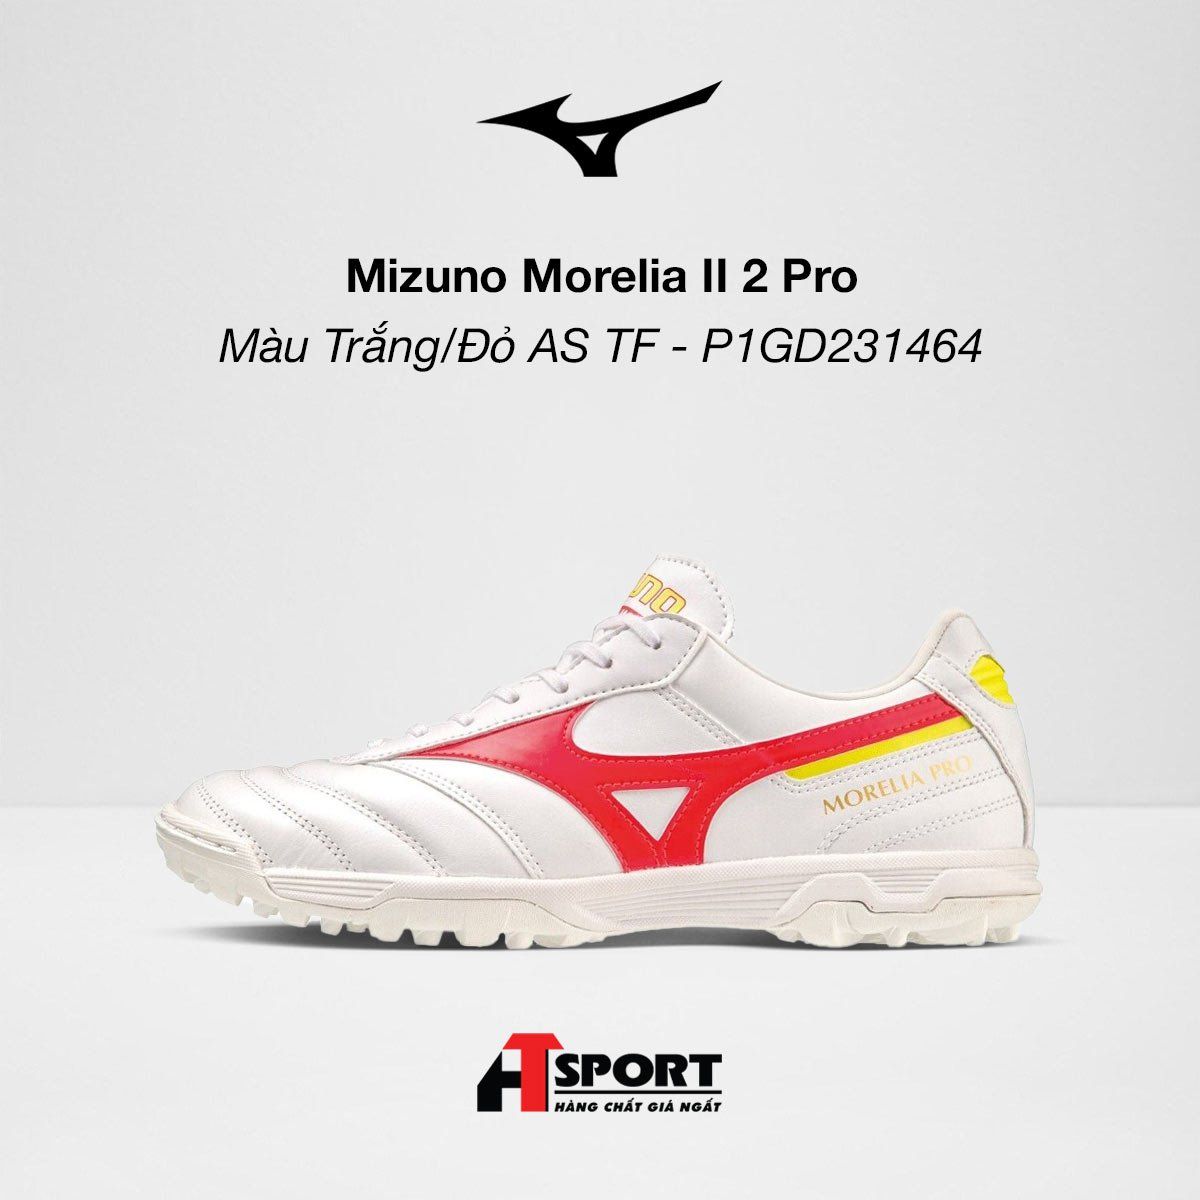  Mizuno Morelia II 2 Pro - Màu Trắng/Đỏ AS TF - P1GD231464 